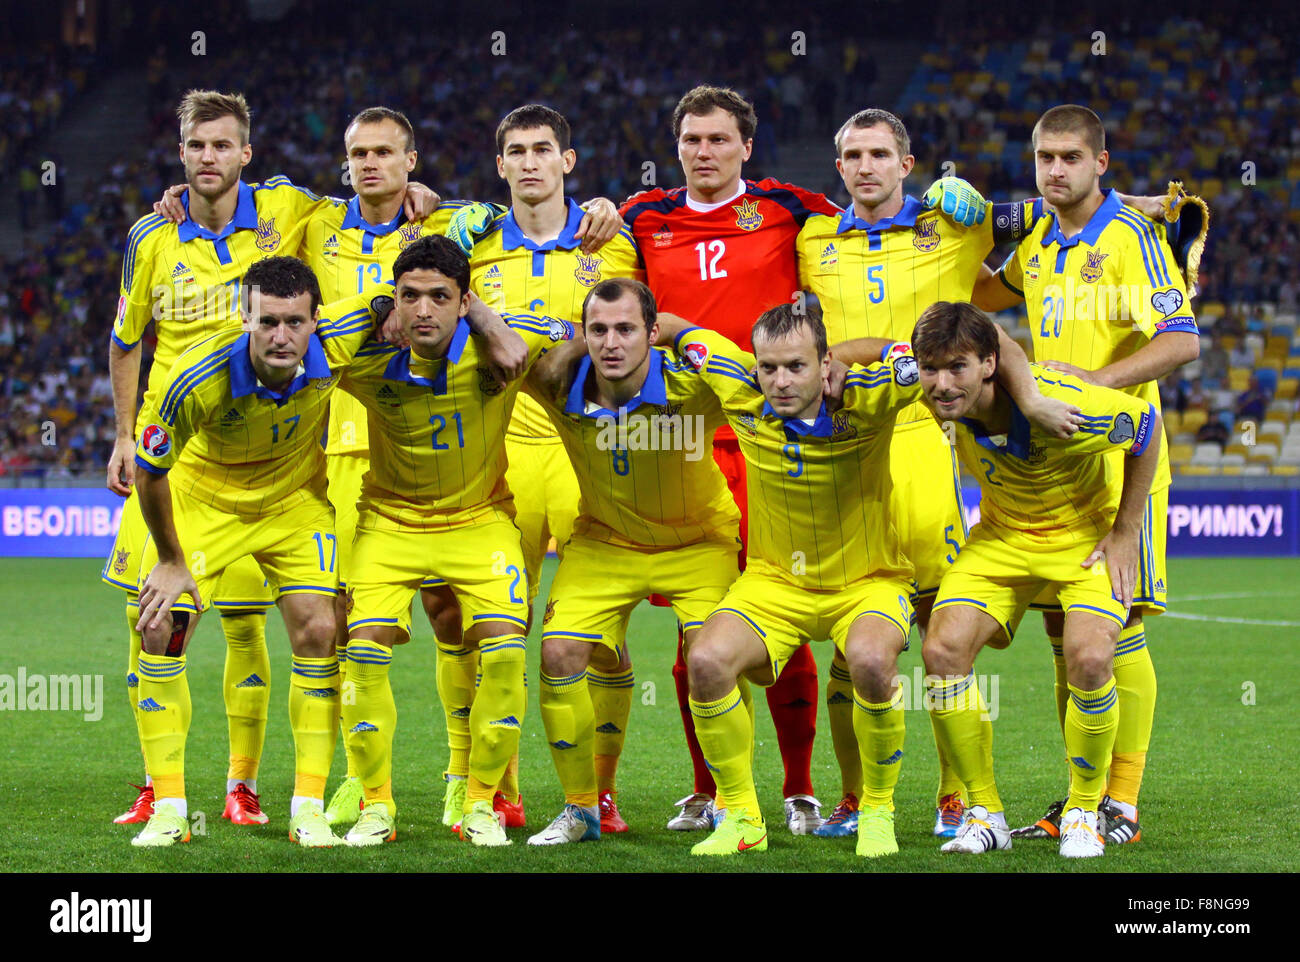 KYIV, UKRAINE - SEPTEMBER 8, 2014: Players of National football team of Ukraine pose for a group photo before UEFA EURO 2016 Qua Stock Photo